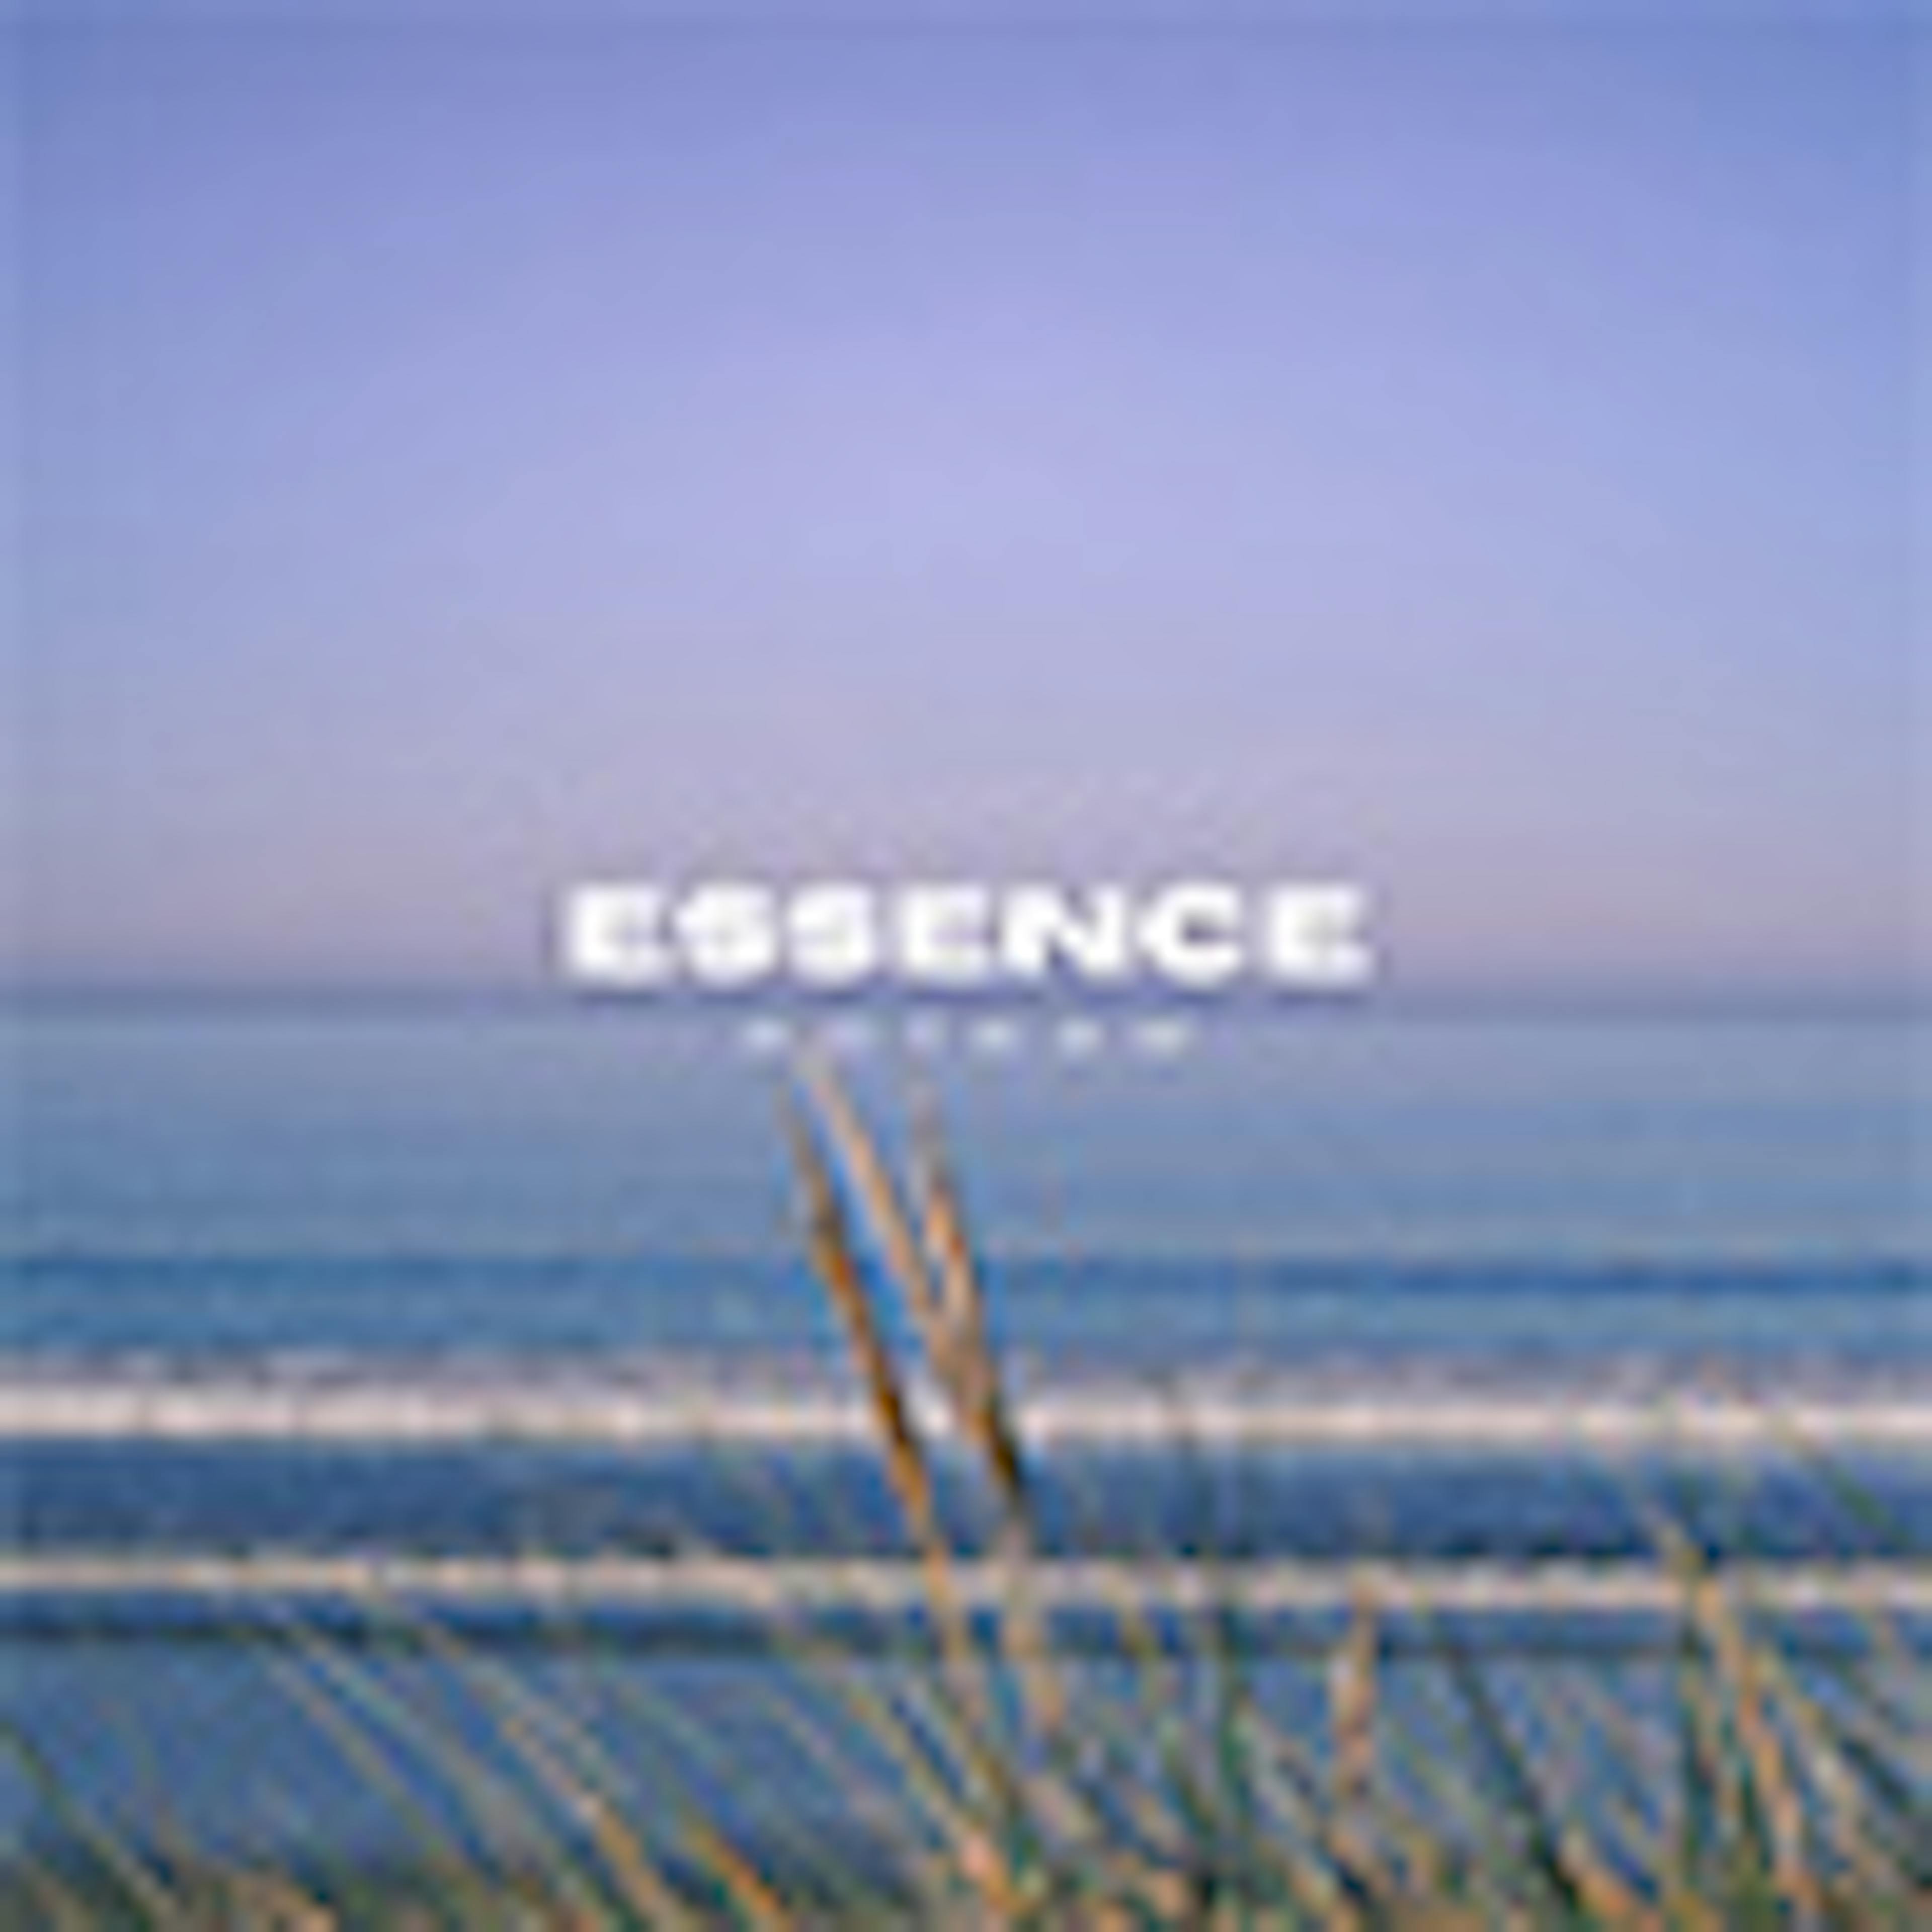 Essence album cover